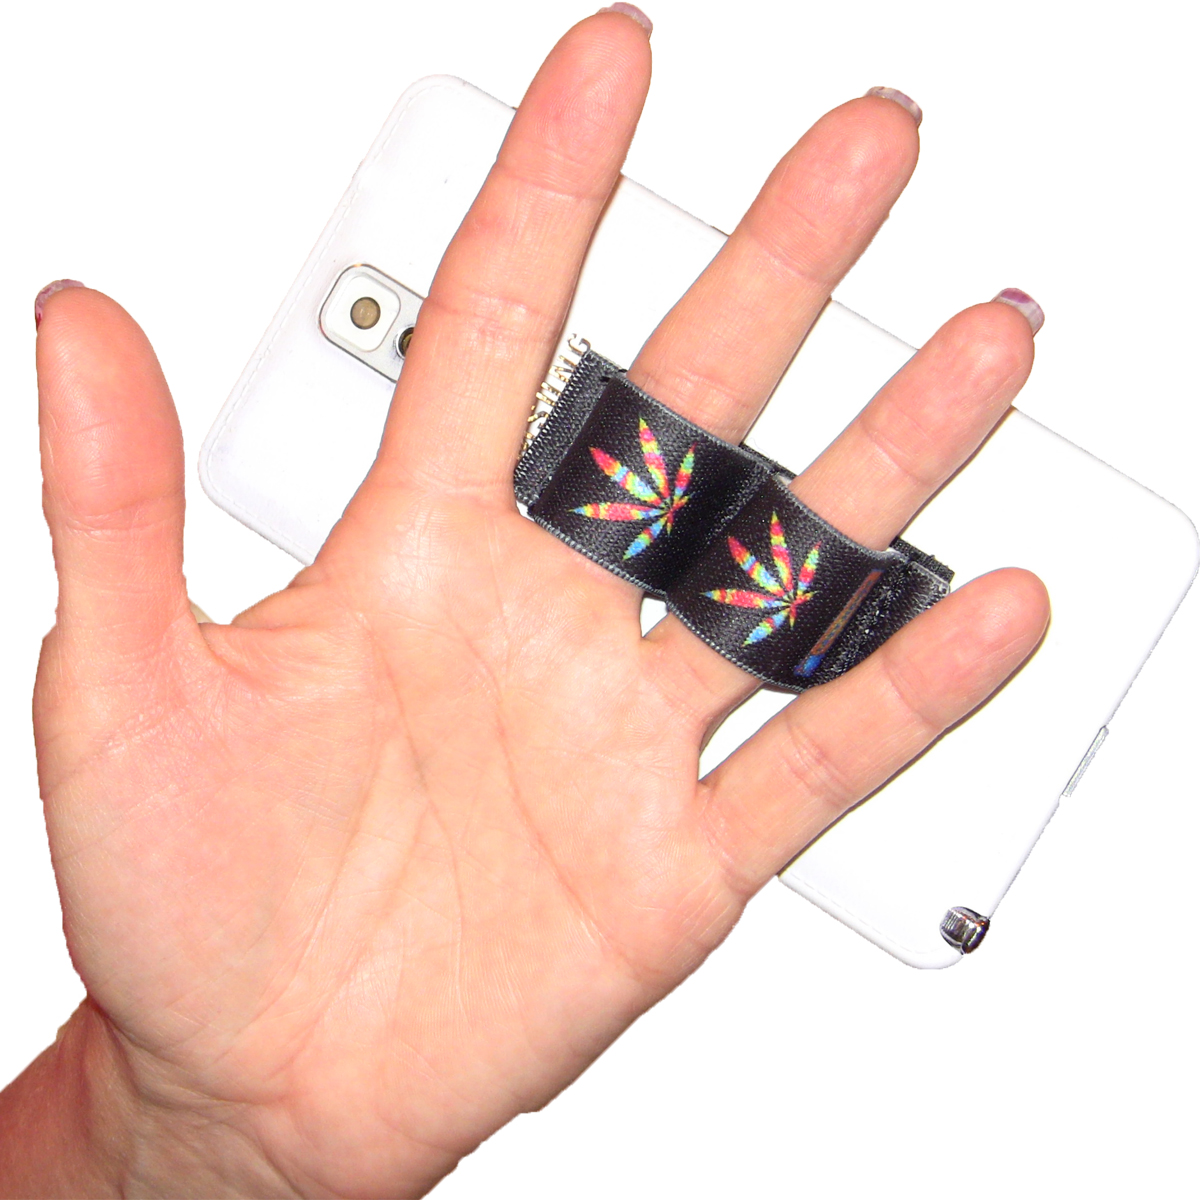 2-Loop Phone Grip - Pot Leaf USA